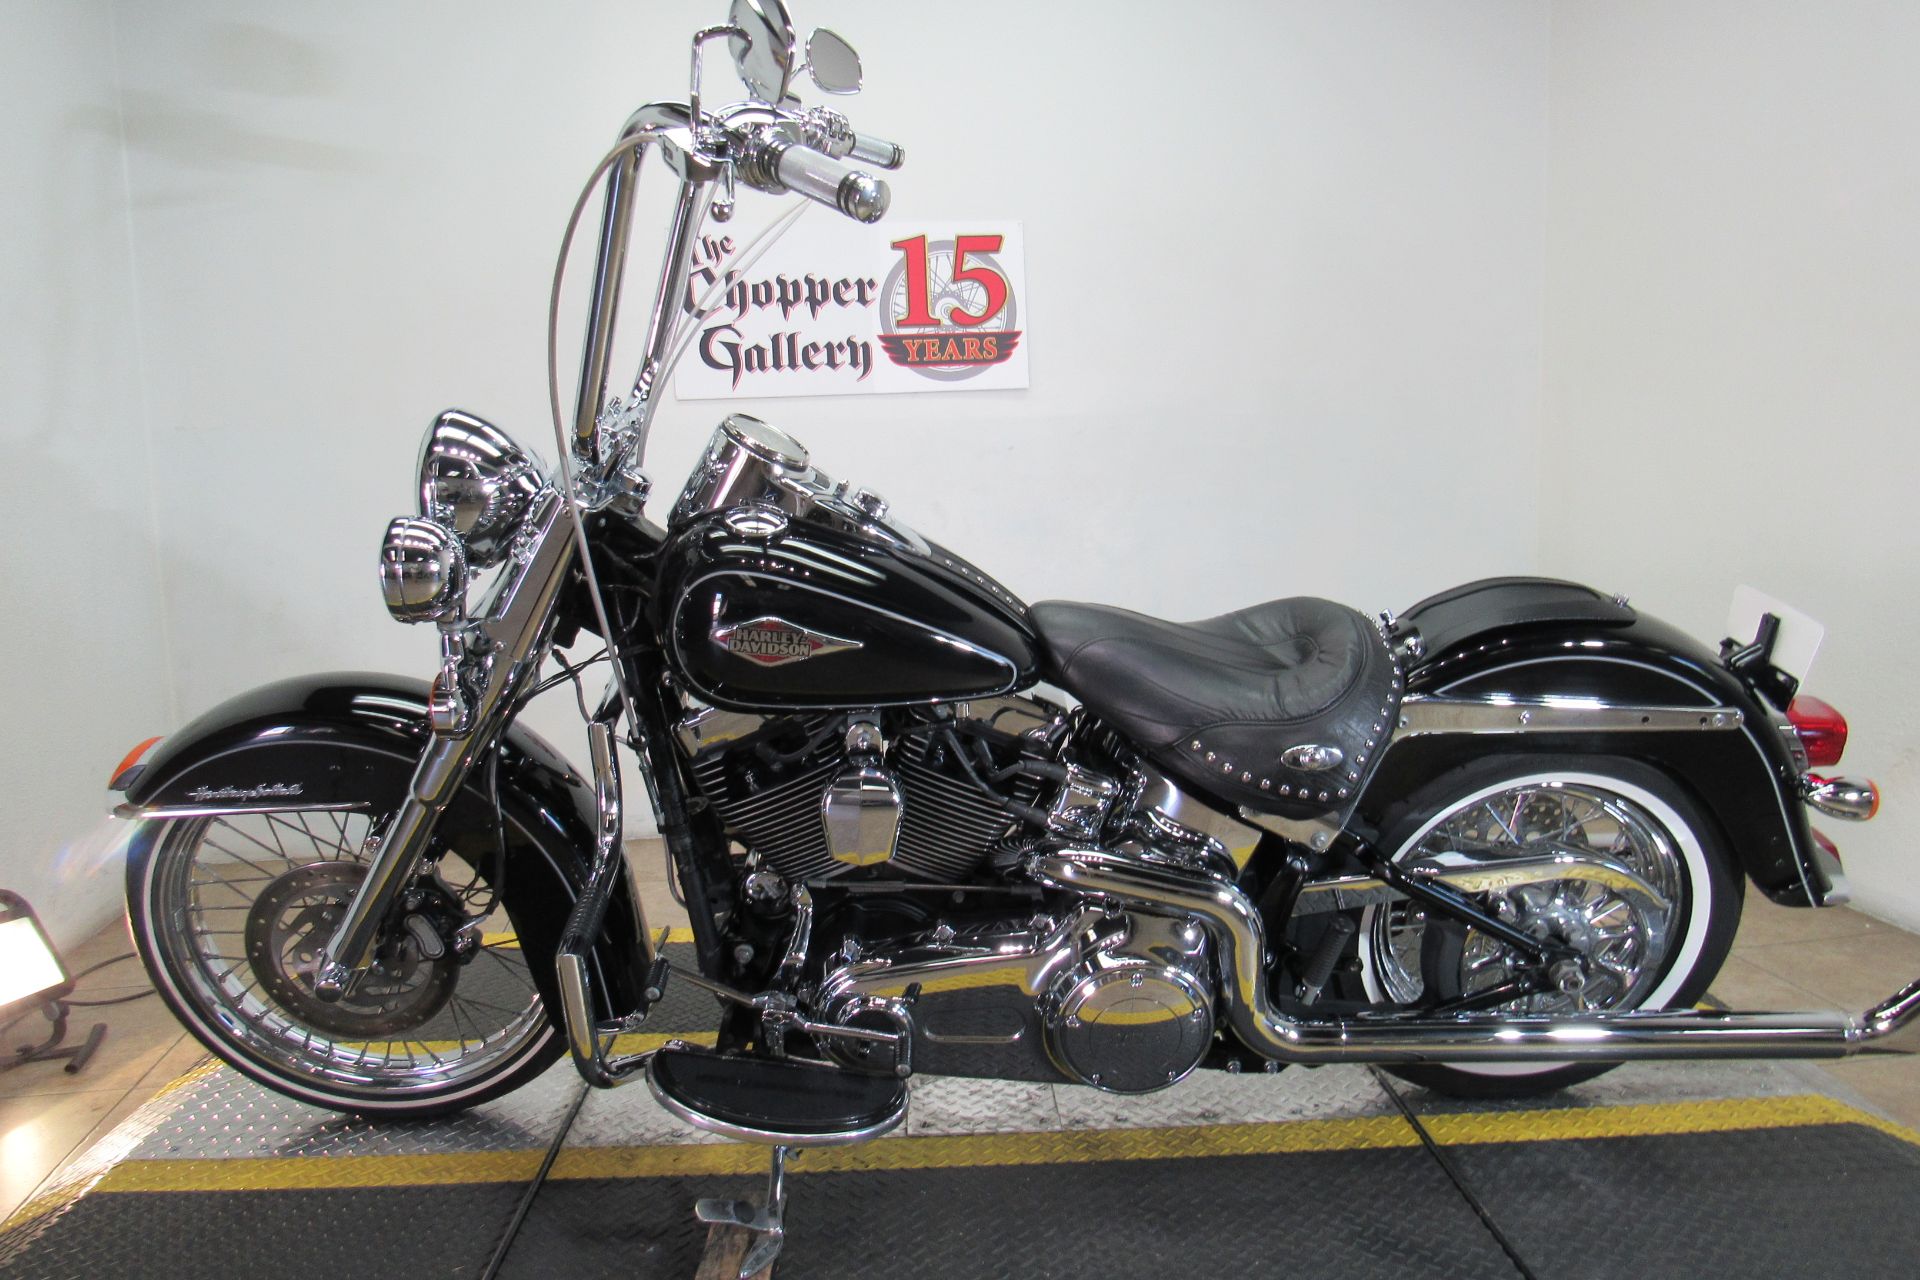 2012 Harley-Davidson Heritage Softail® Classic in Temecula, California - Photo 17